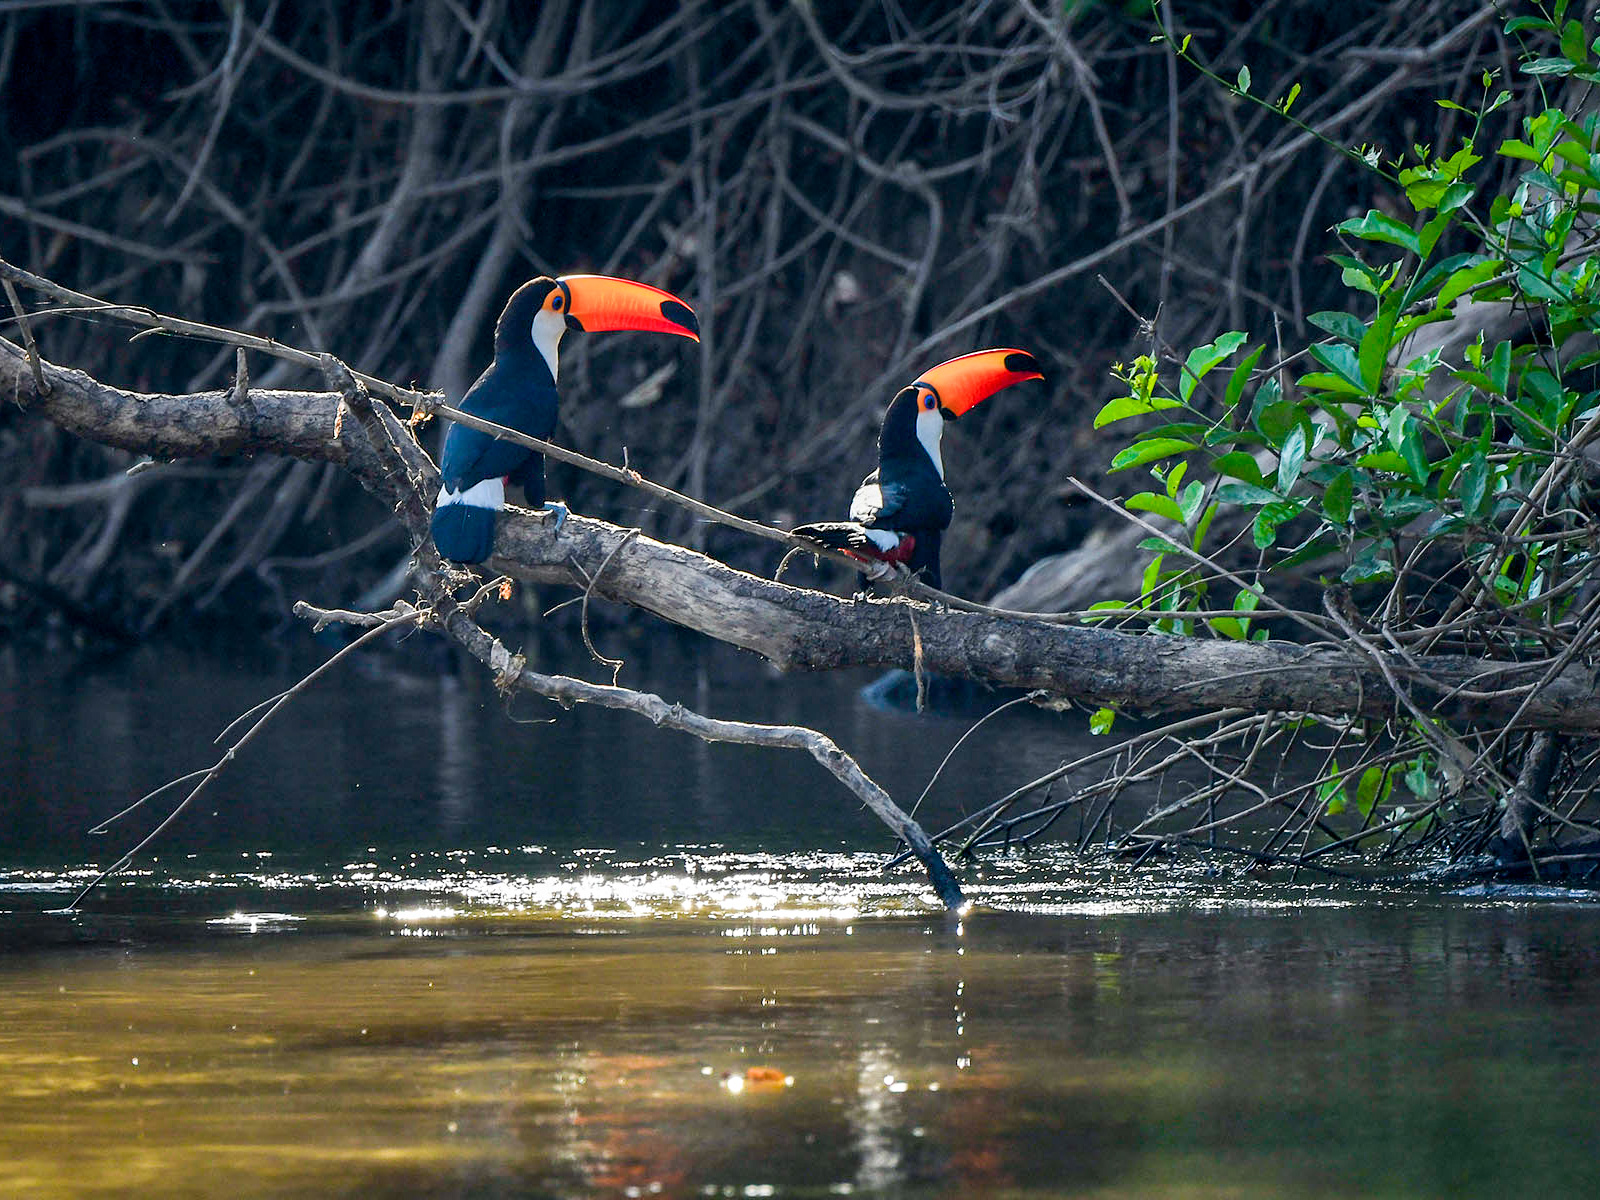 Toucans at the Rio Aquidauna